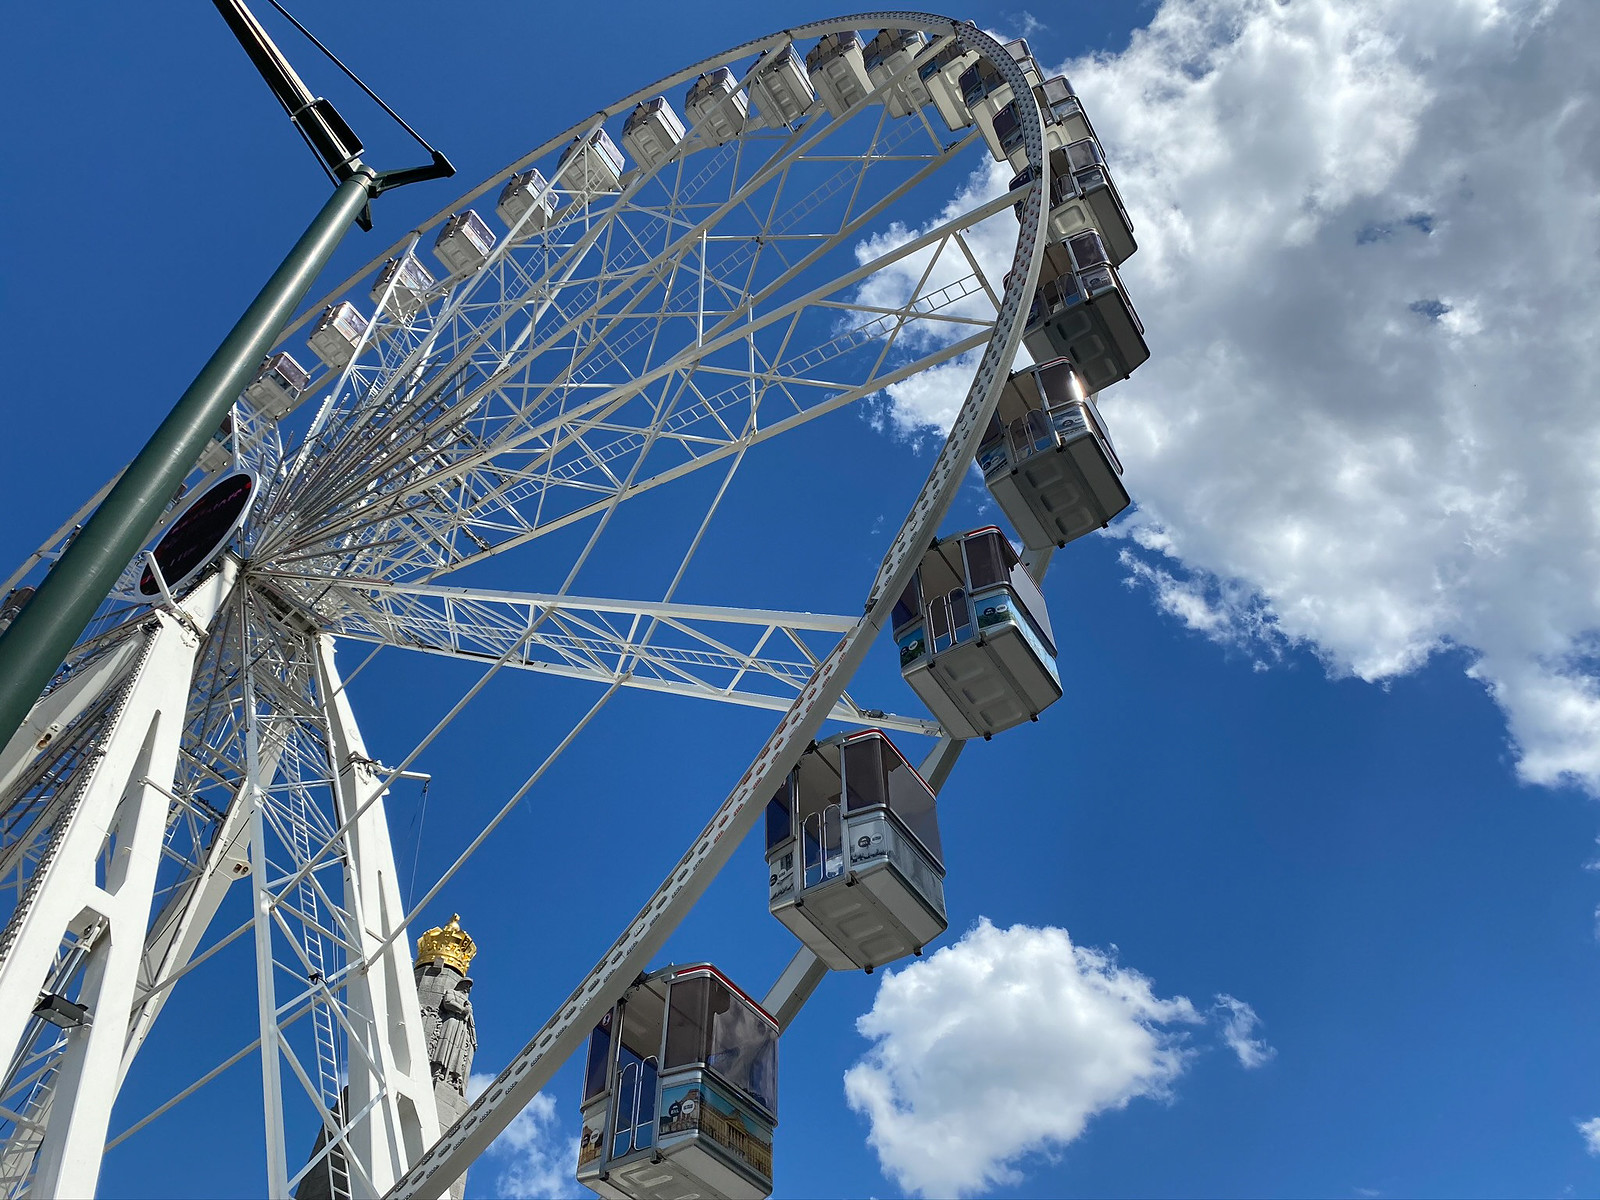 The View Brussels Ferris Wheel